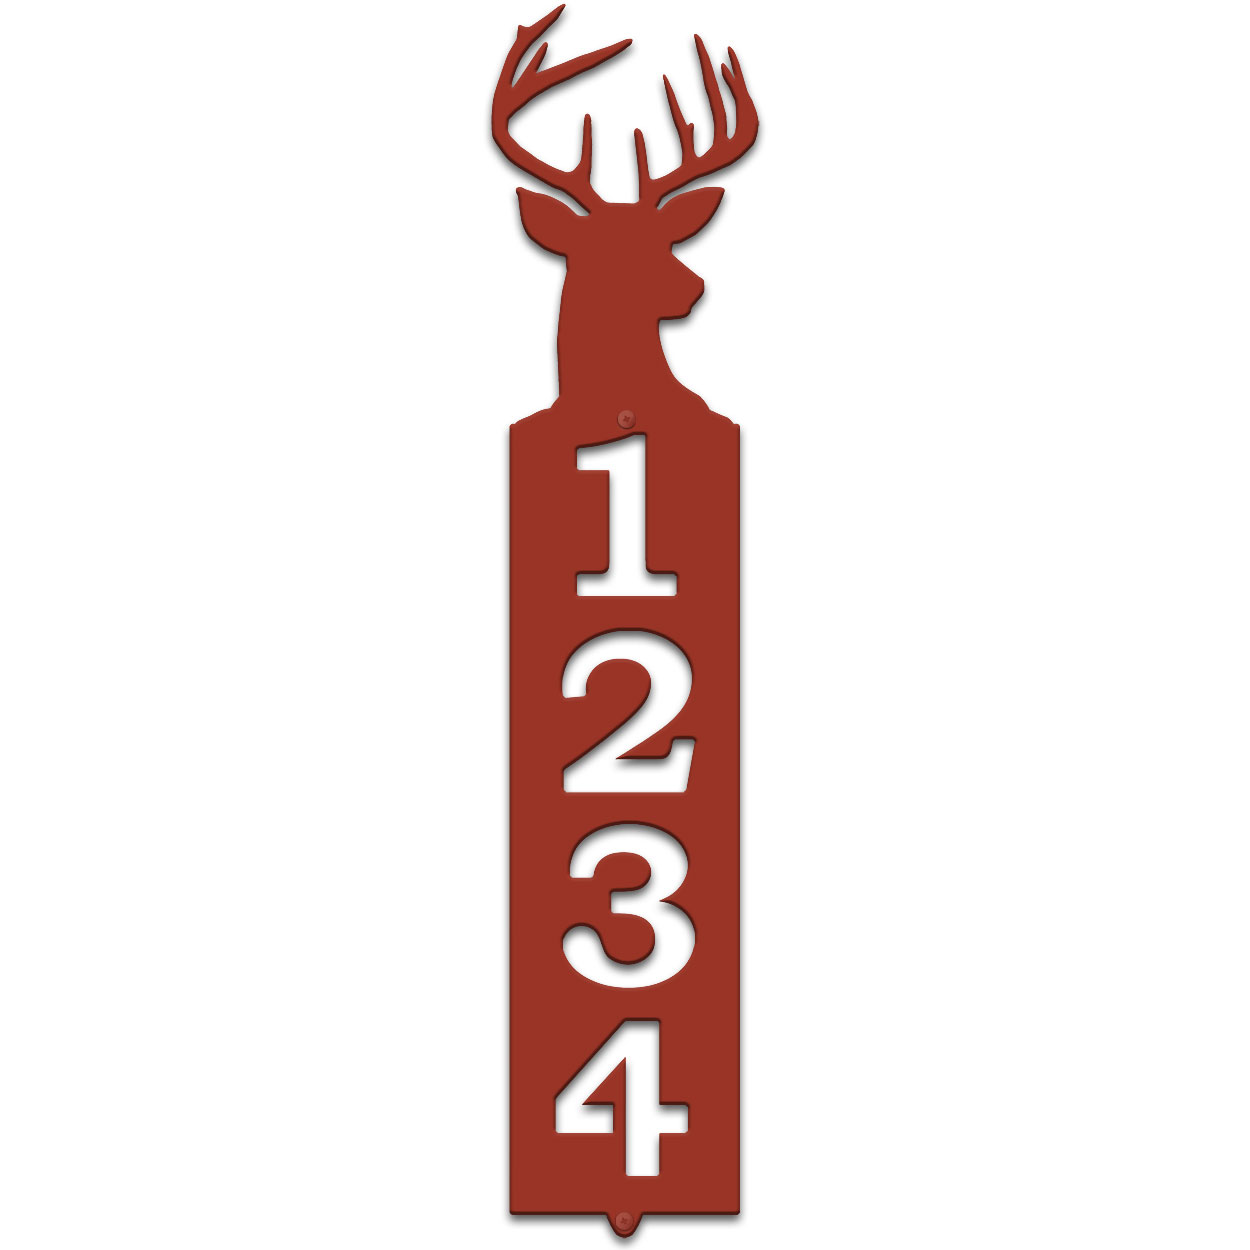 635134 - Deer Bust Cut Outs Four Digit Address Number Plaque